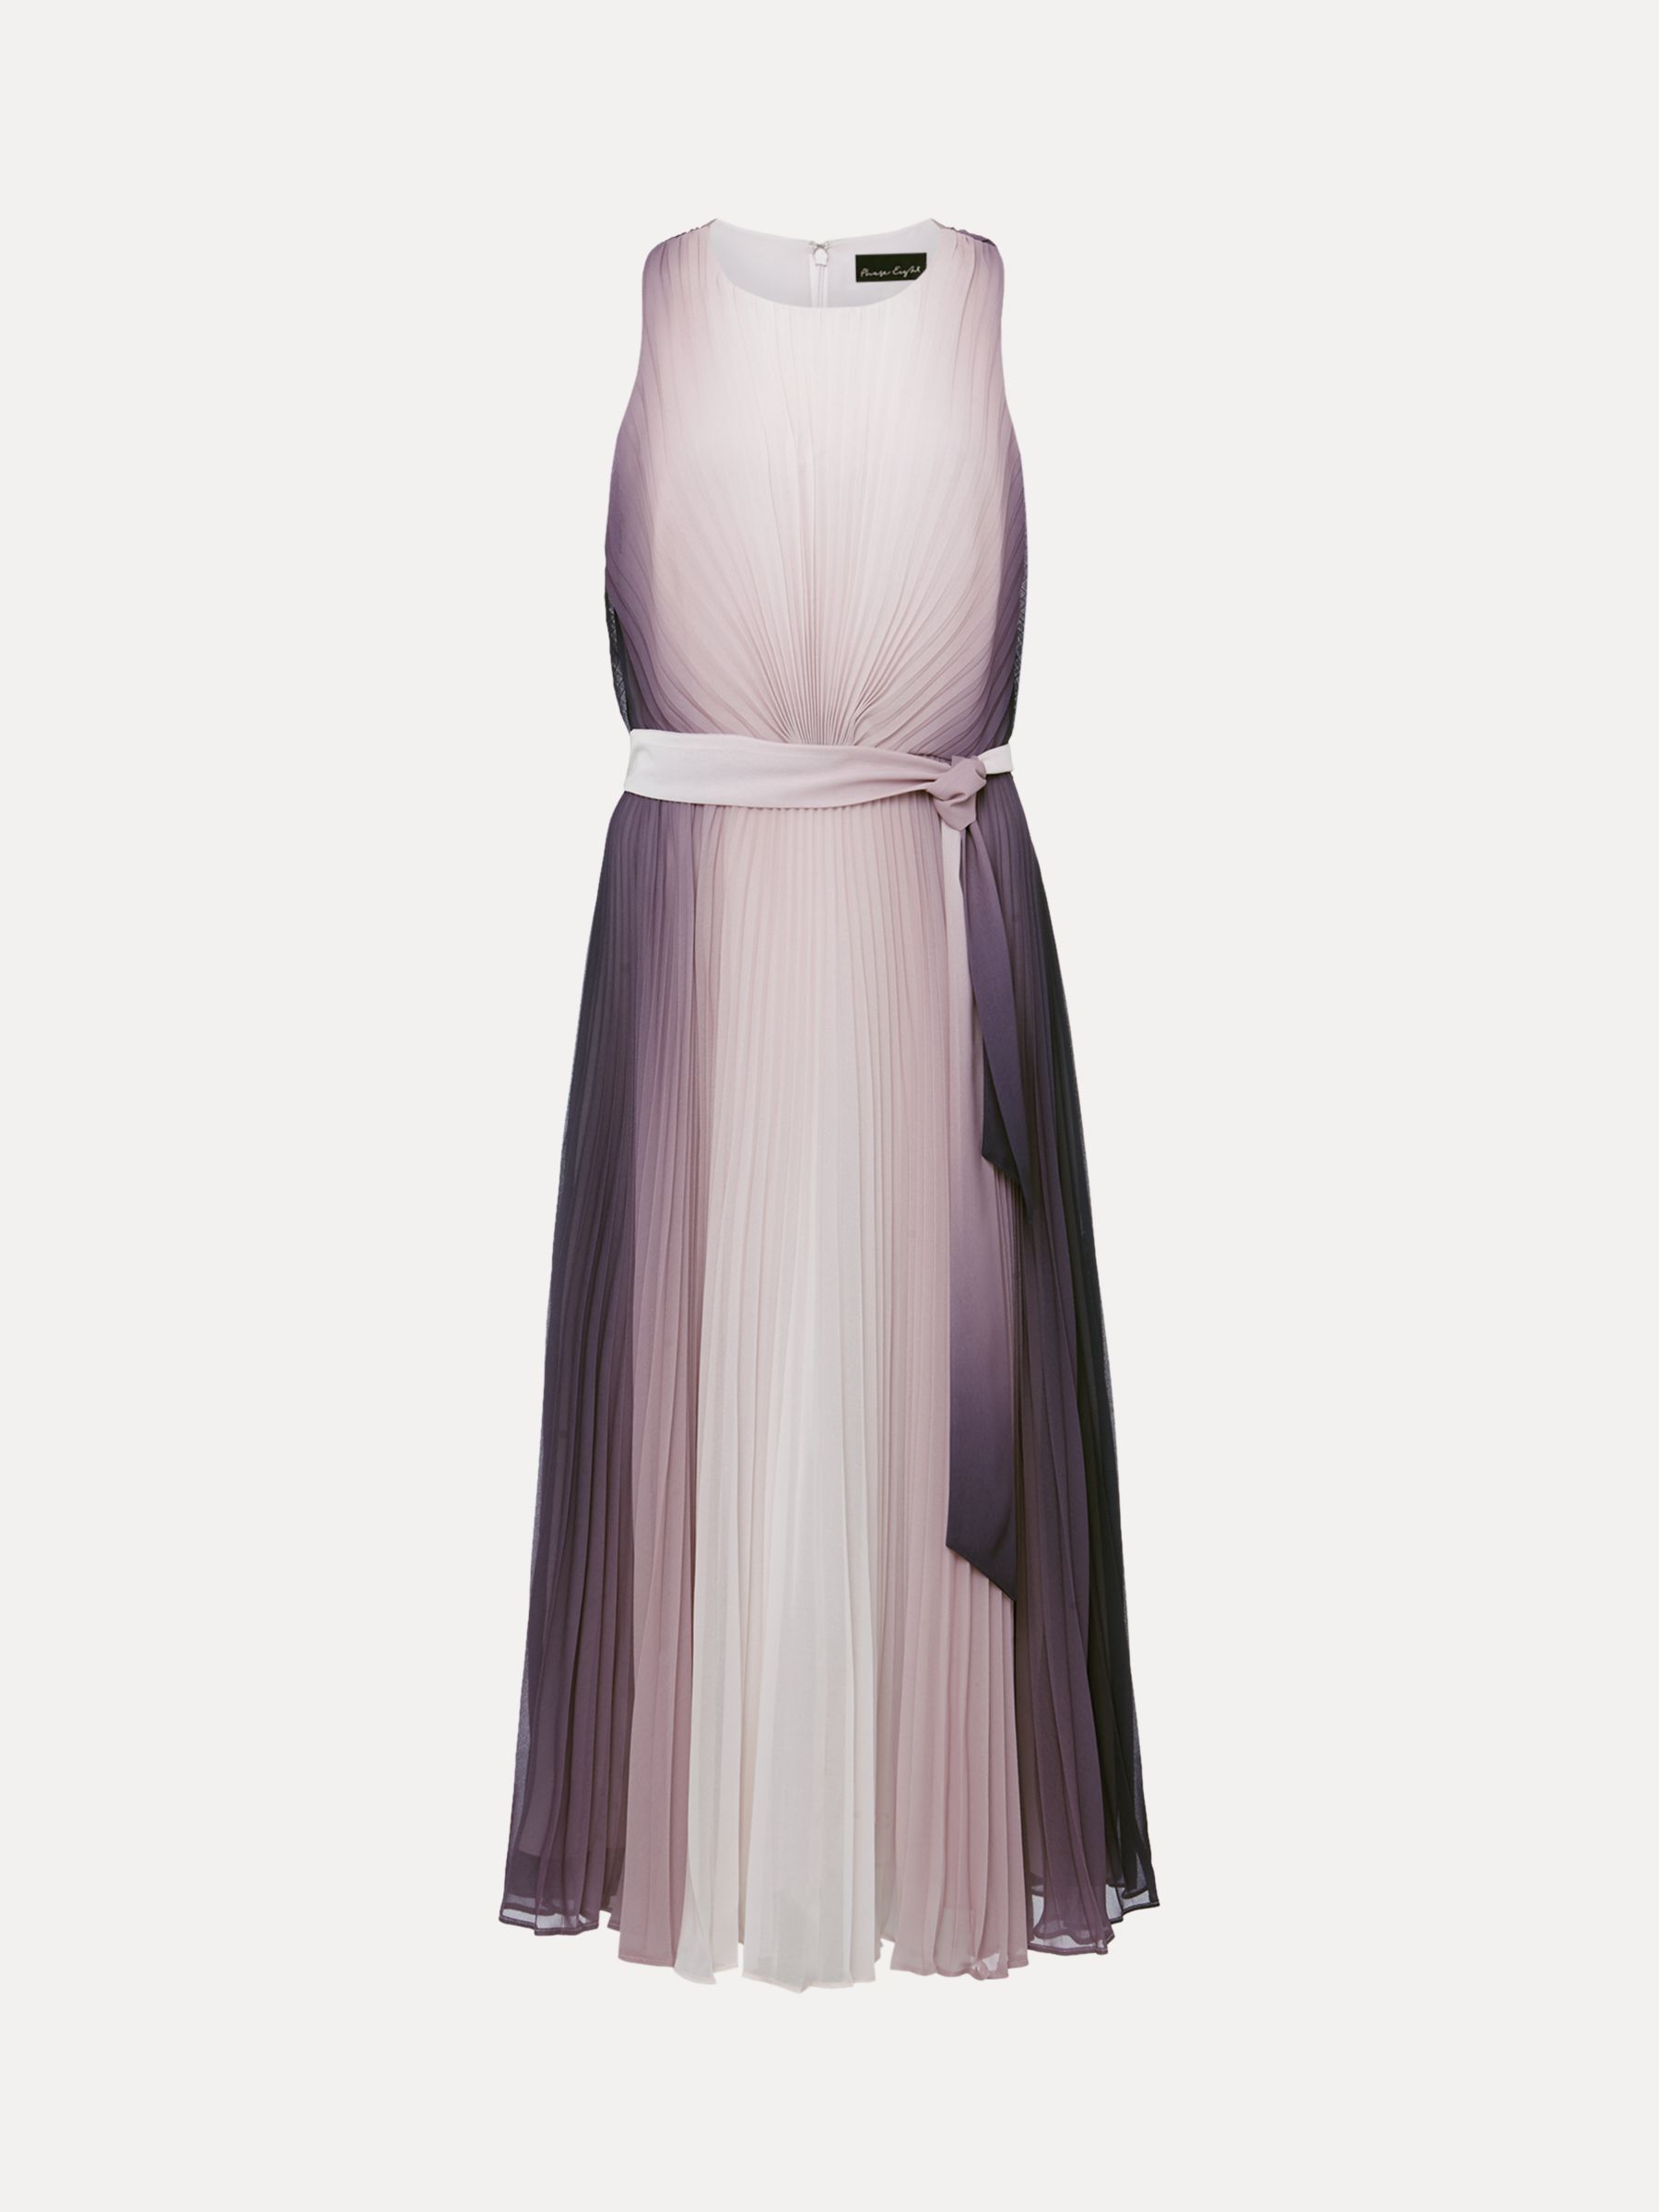 Phase Eight Simara Ombre Pleat Midi Dress, Latte/Navy, 6